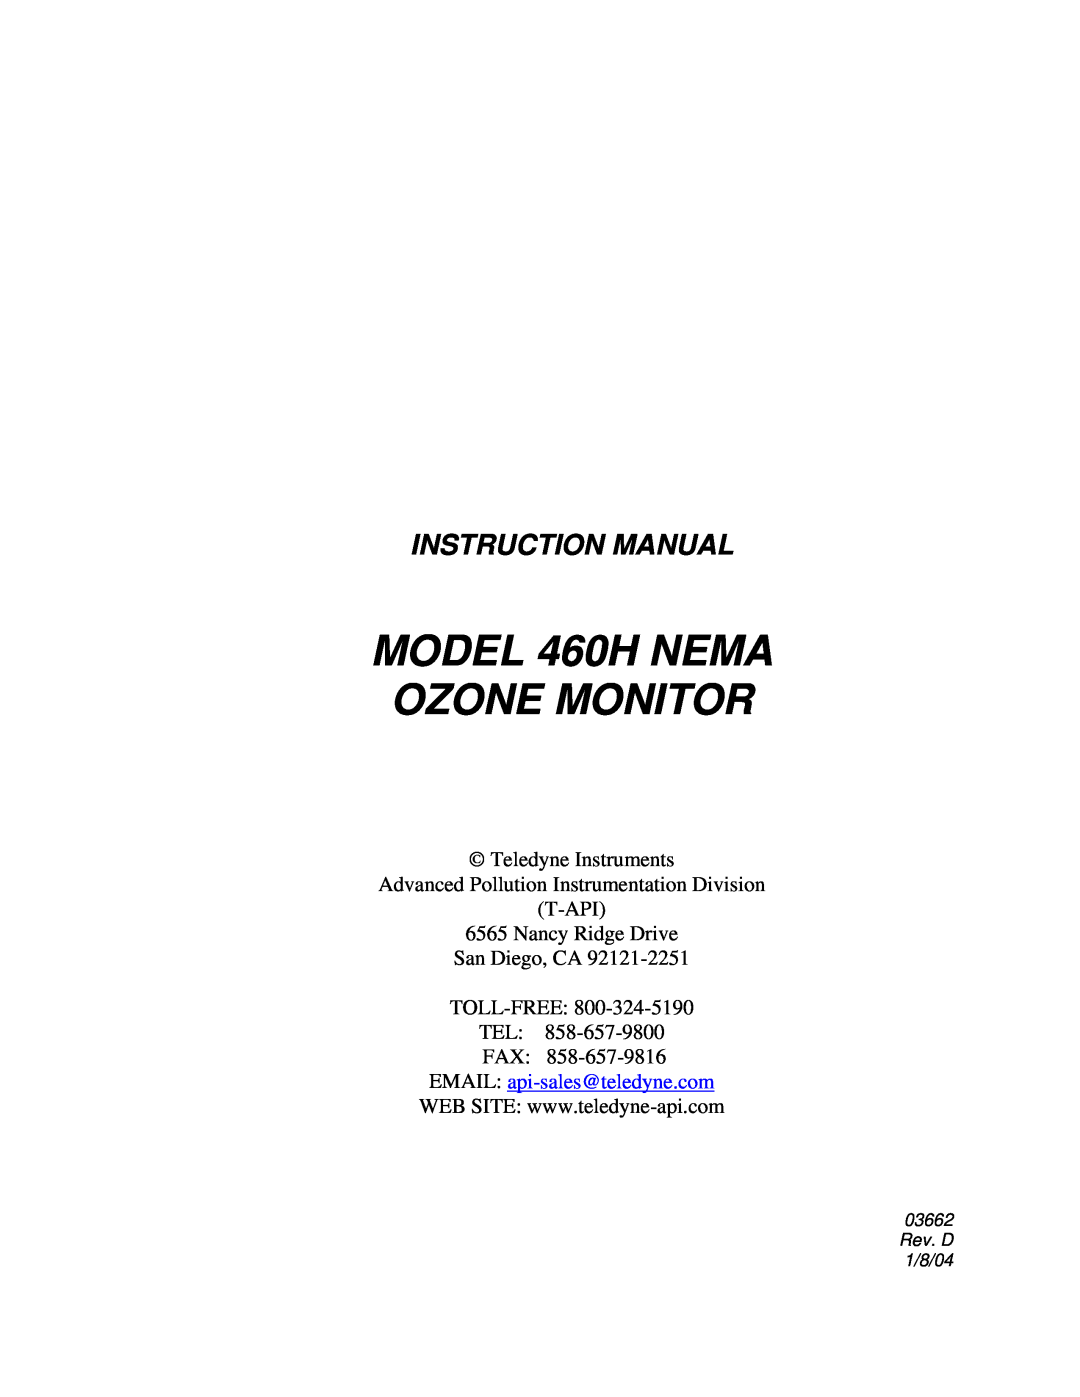 Teledyne instruction manual MODEL 460H NEMA OZONE MONITOR, Instruction Manual, EMAIL api-sales@teledyne.com 